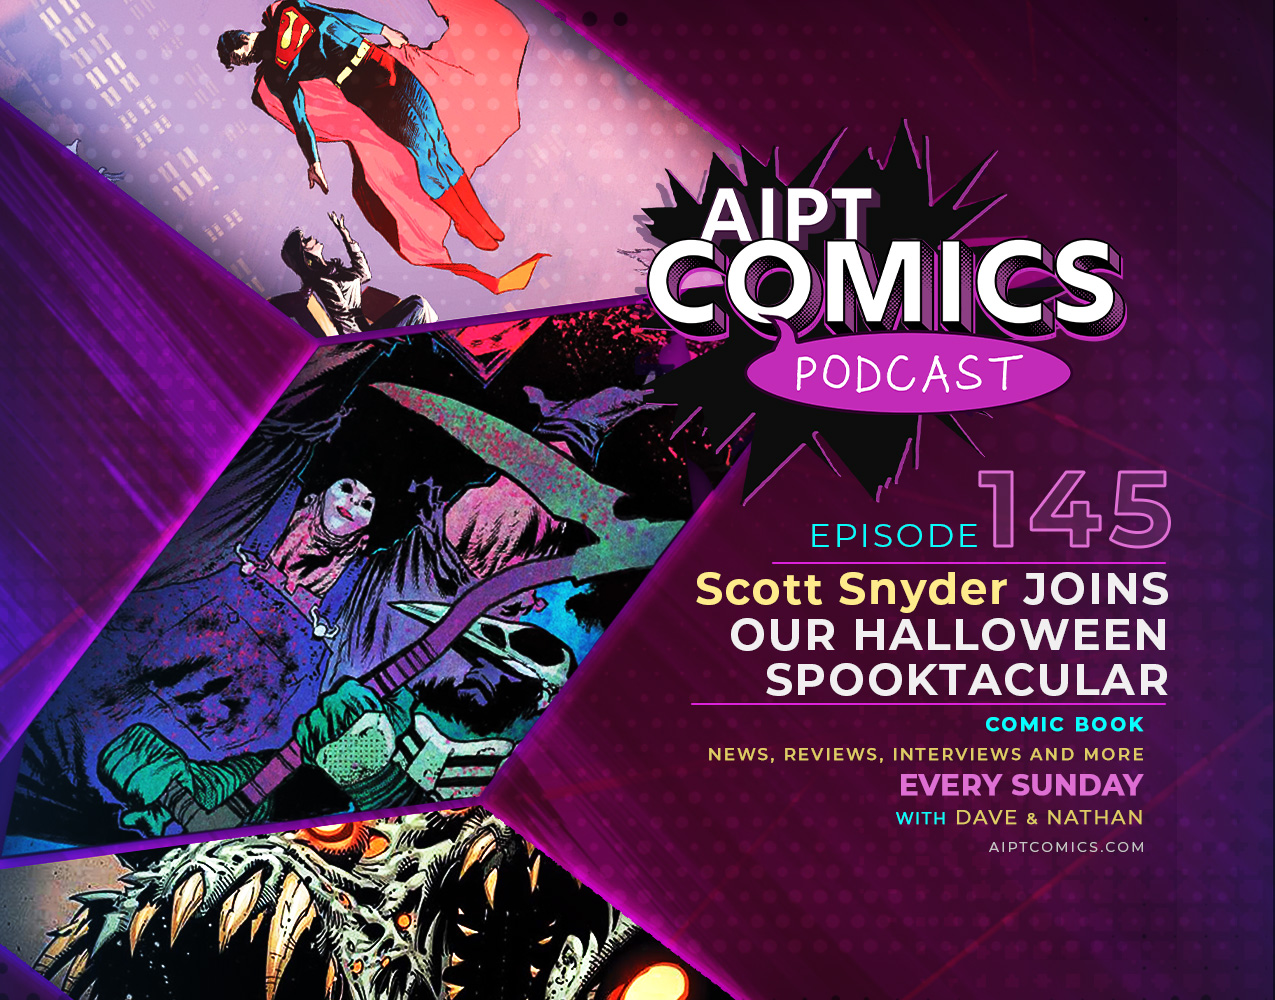 AIPT Comics Podcast episode 145: Scott Snyder joins our Halloween spooktacular